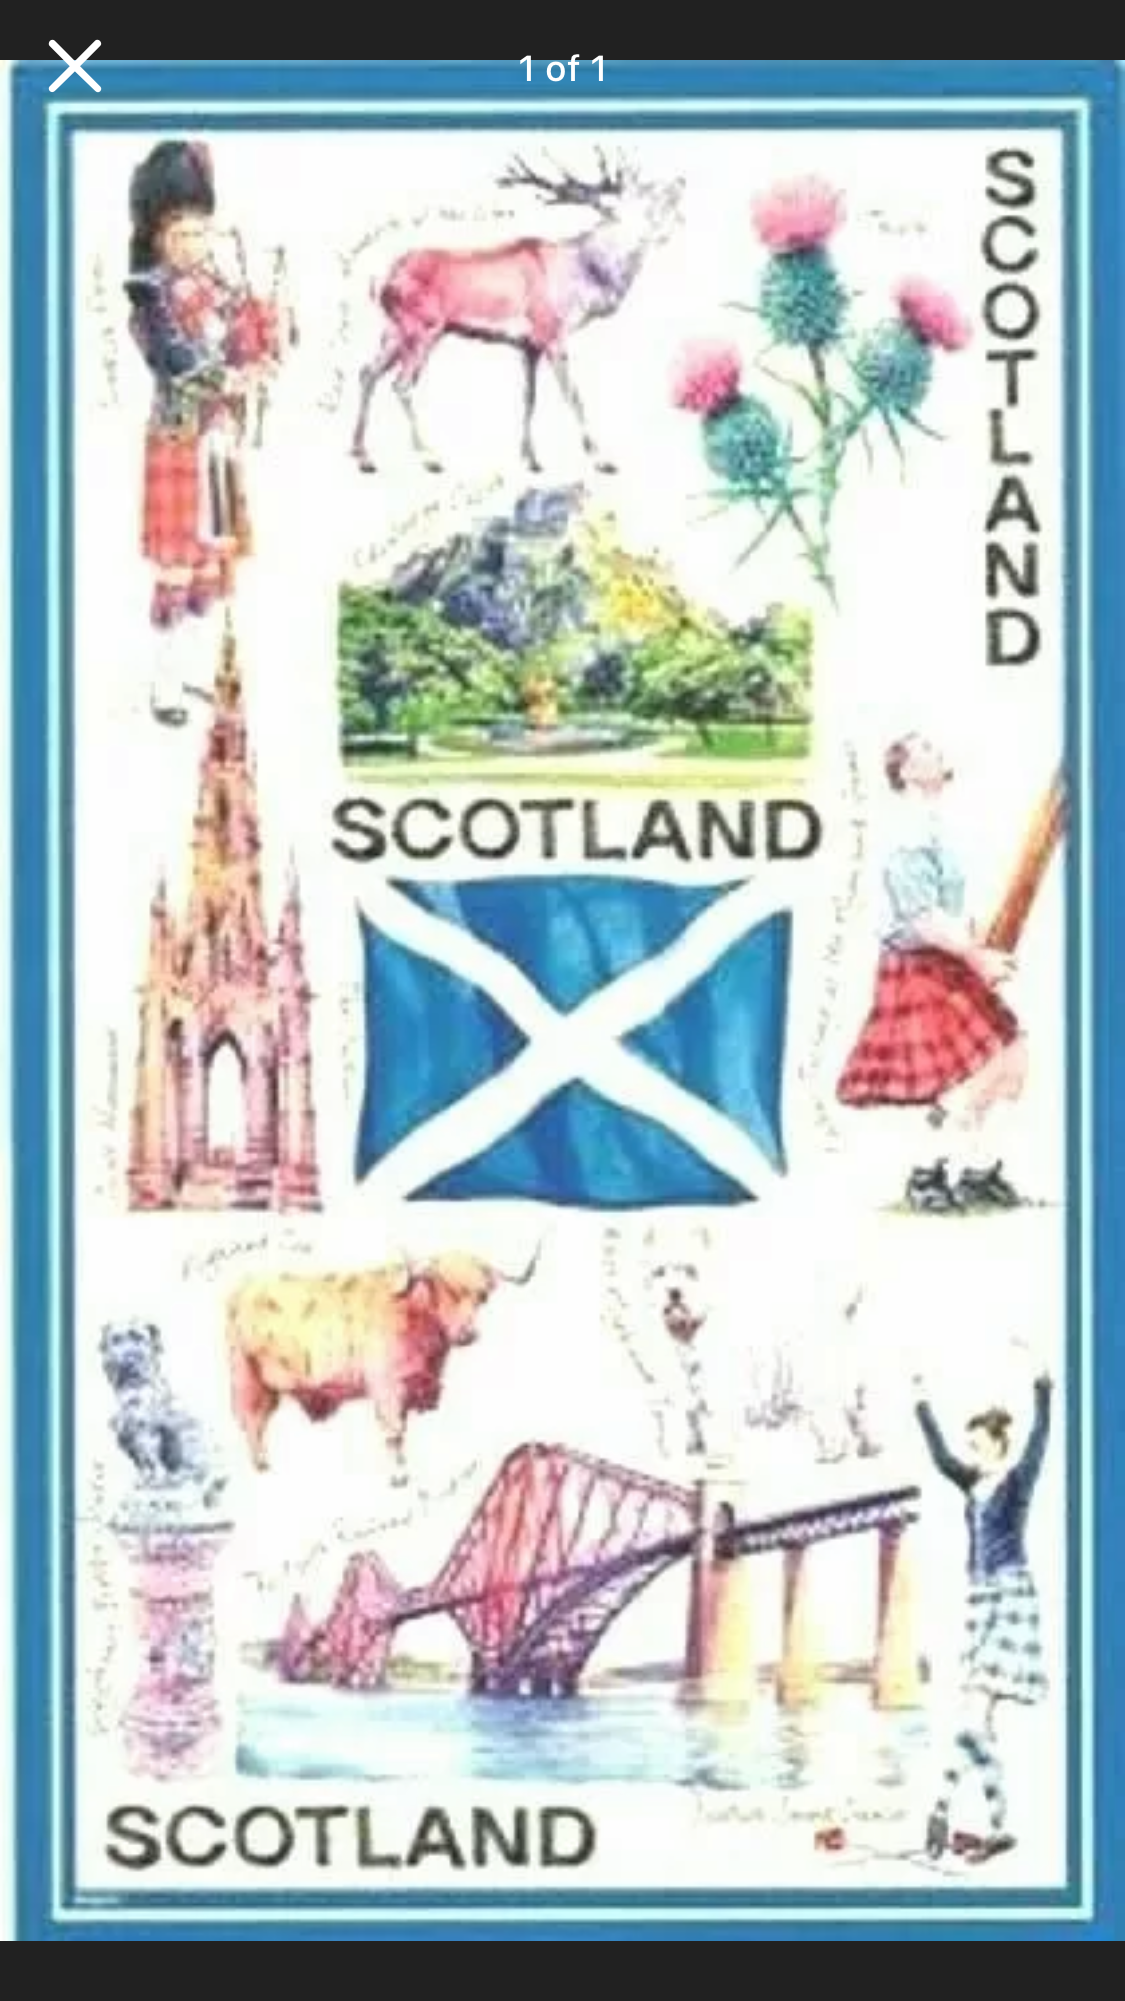 Scottish Tea Towel Souvenir Gift Scotland Saltire Flag Stag Bagpiper Landmarks